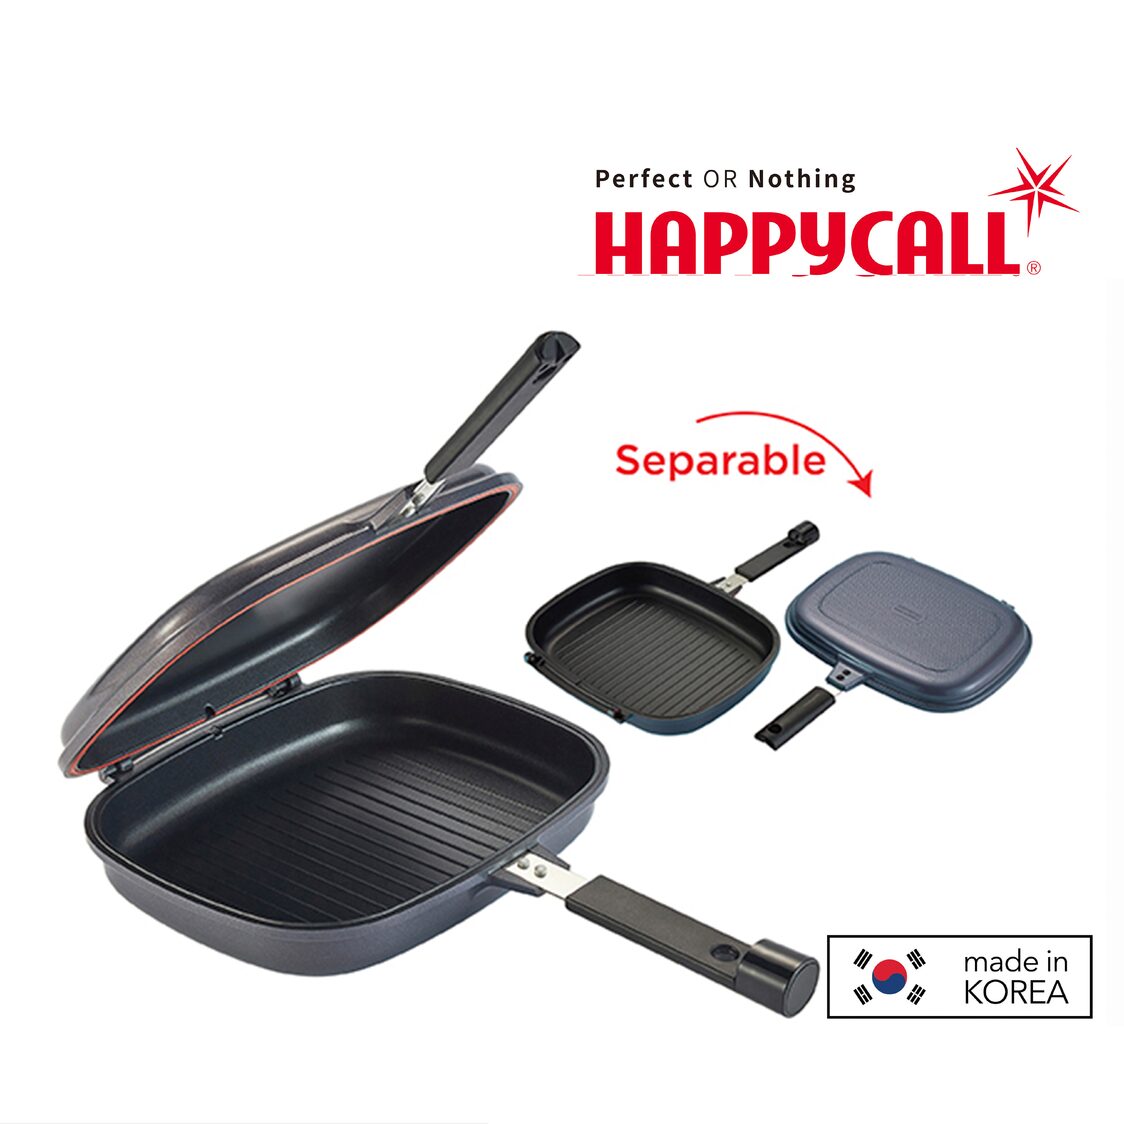 Happy call non stick pan  Happycall pan recipe, Grill pan recipes, Pan